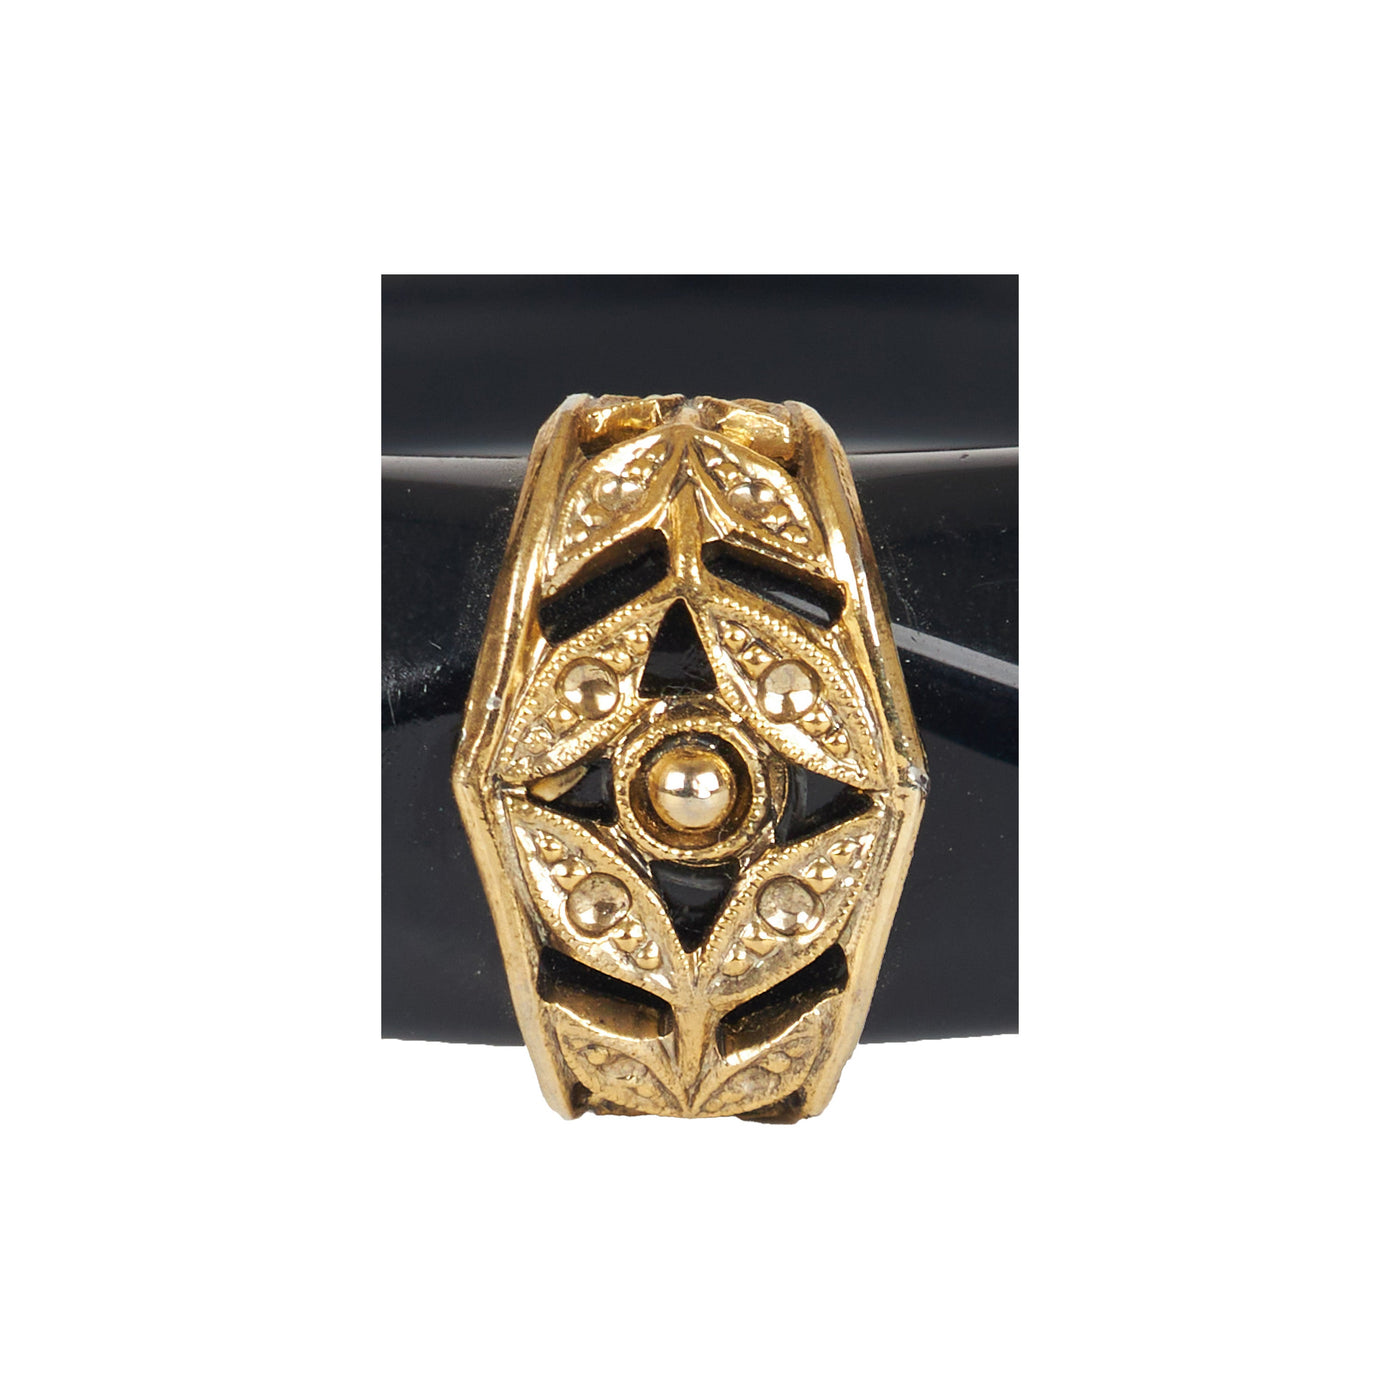 Secondhand Collection Privée Bracelet with Golden Metal Details